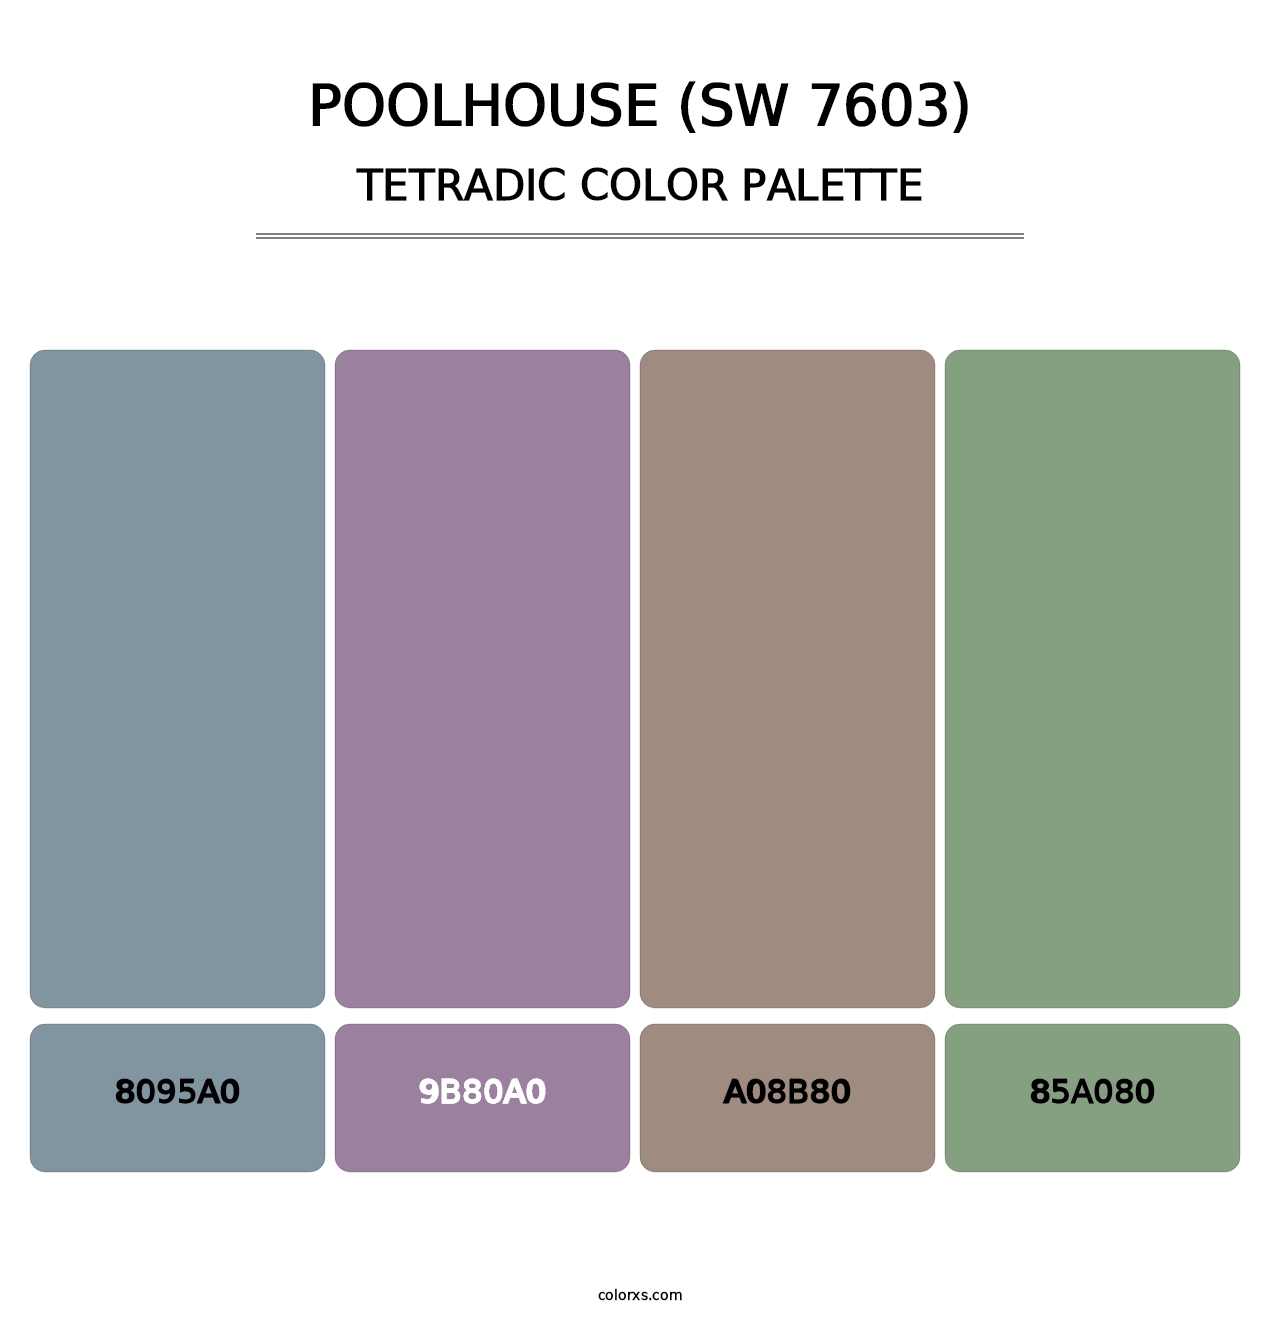 Poolhouse (SW 7603) - Tetradic Color Palette